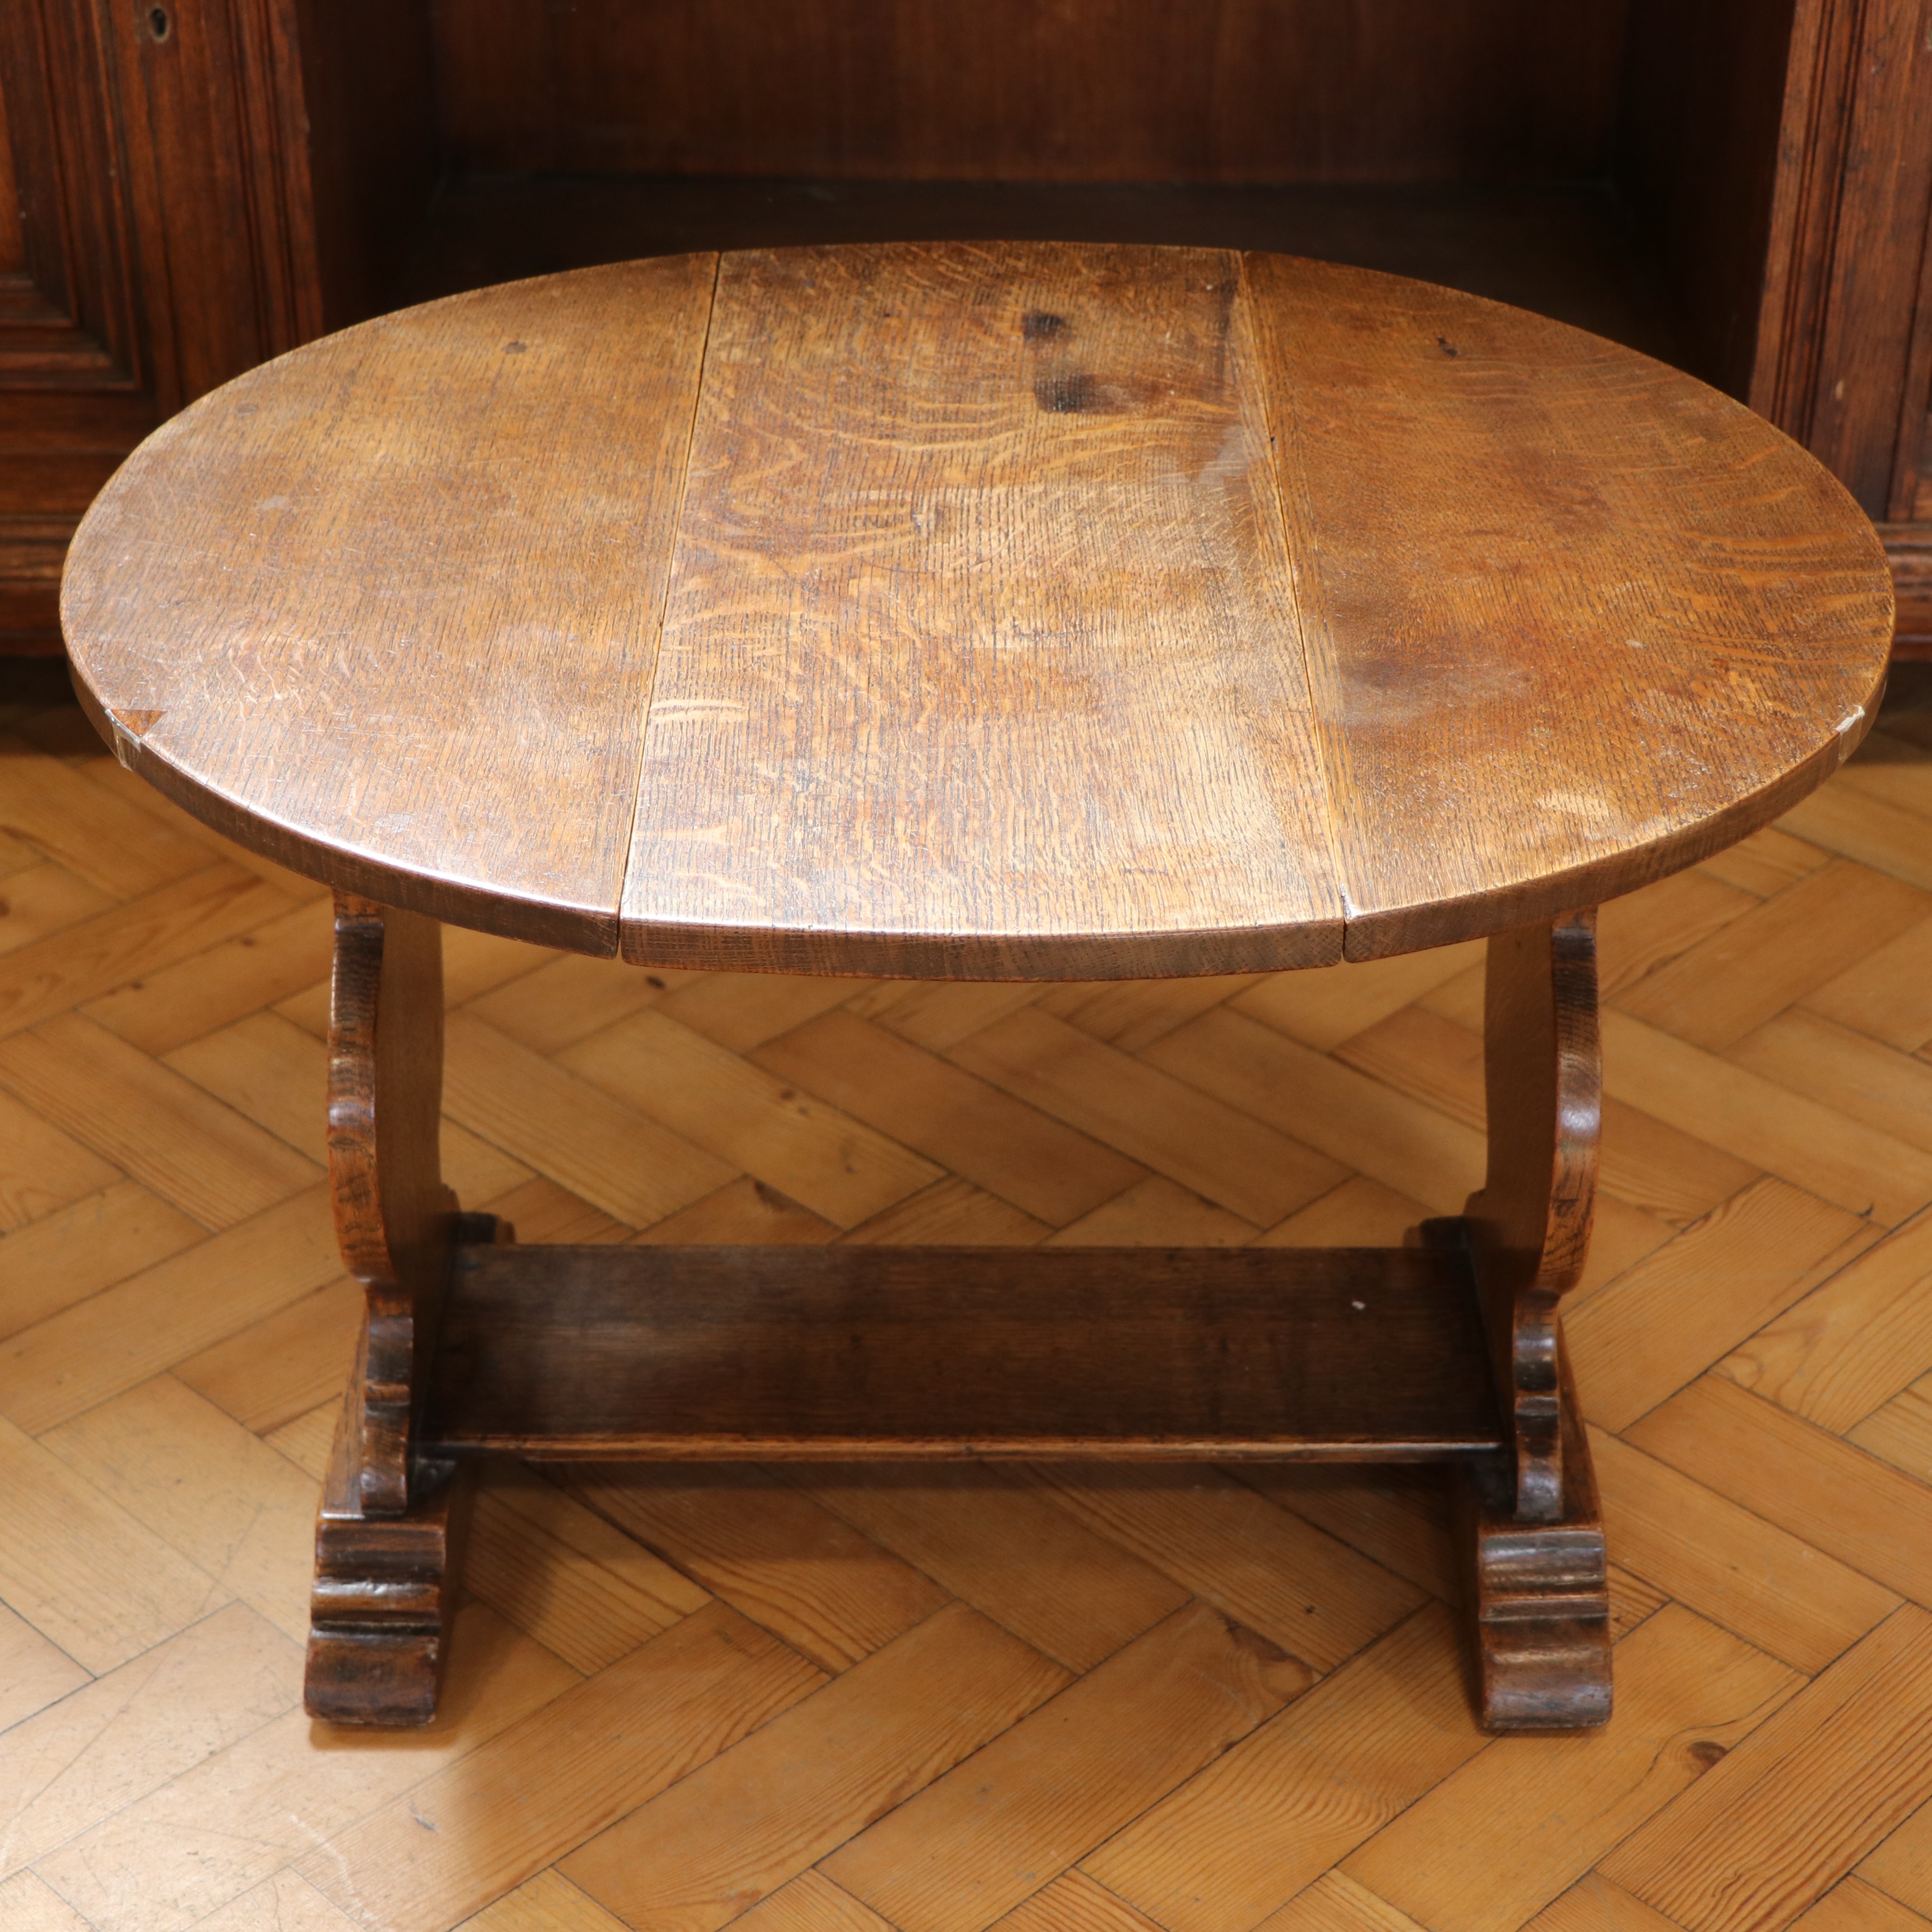 A 17th Century influenced oak drop-leaf coffee or lamp table, 61 cm x 69 cm x 46 cm high - Image 2 of 3